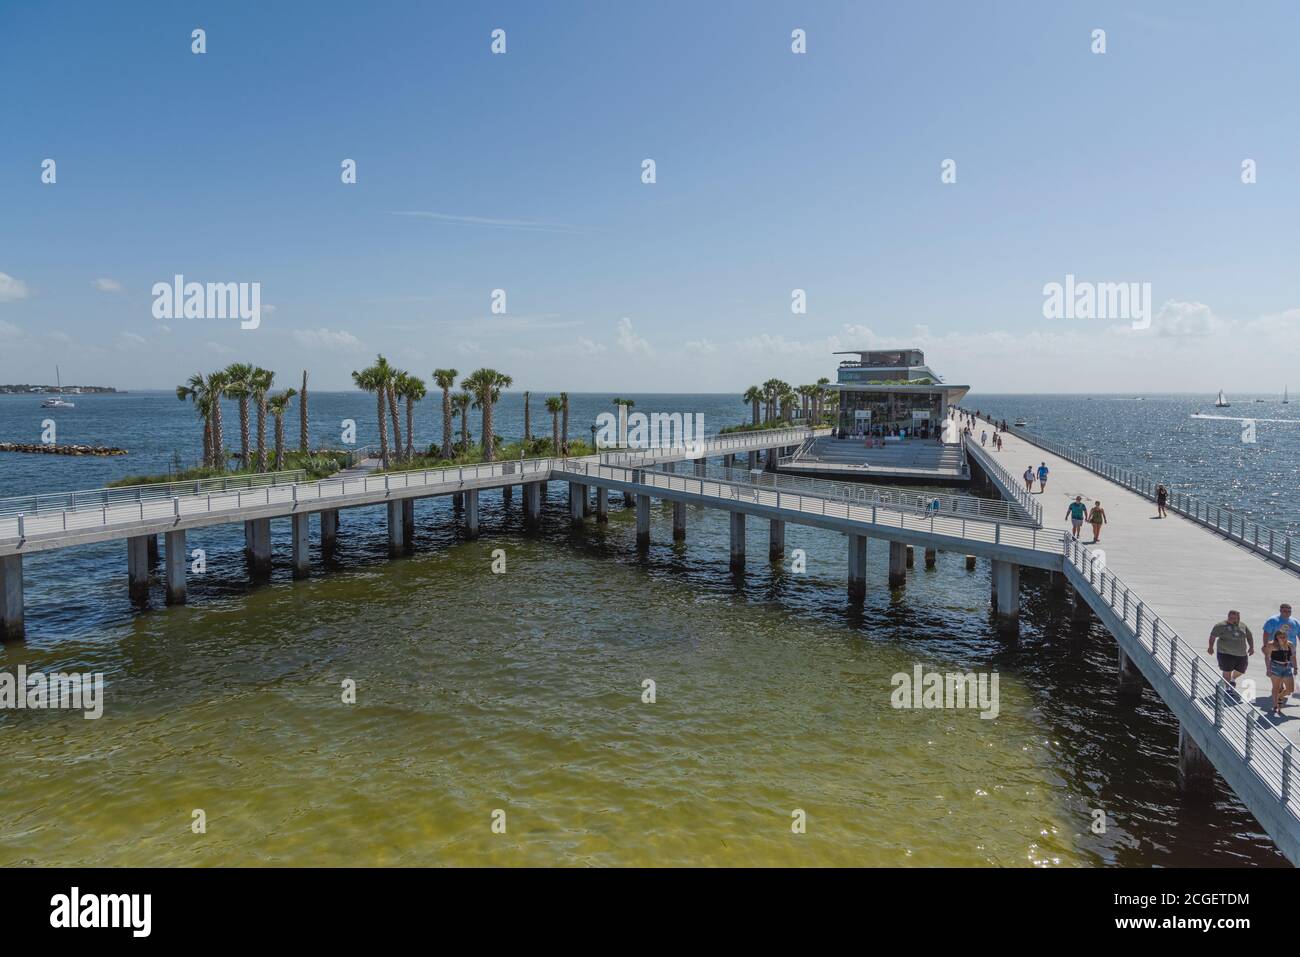 St. Petersburg's new Pier district. St. Petersburg, Florida, USA Stock Photo